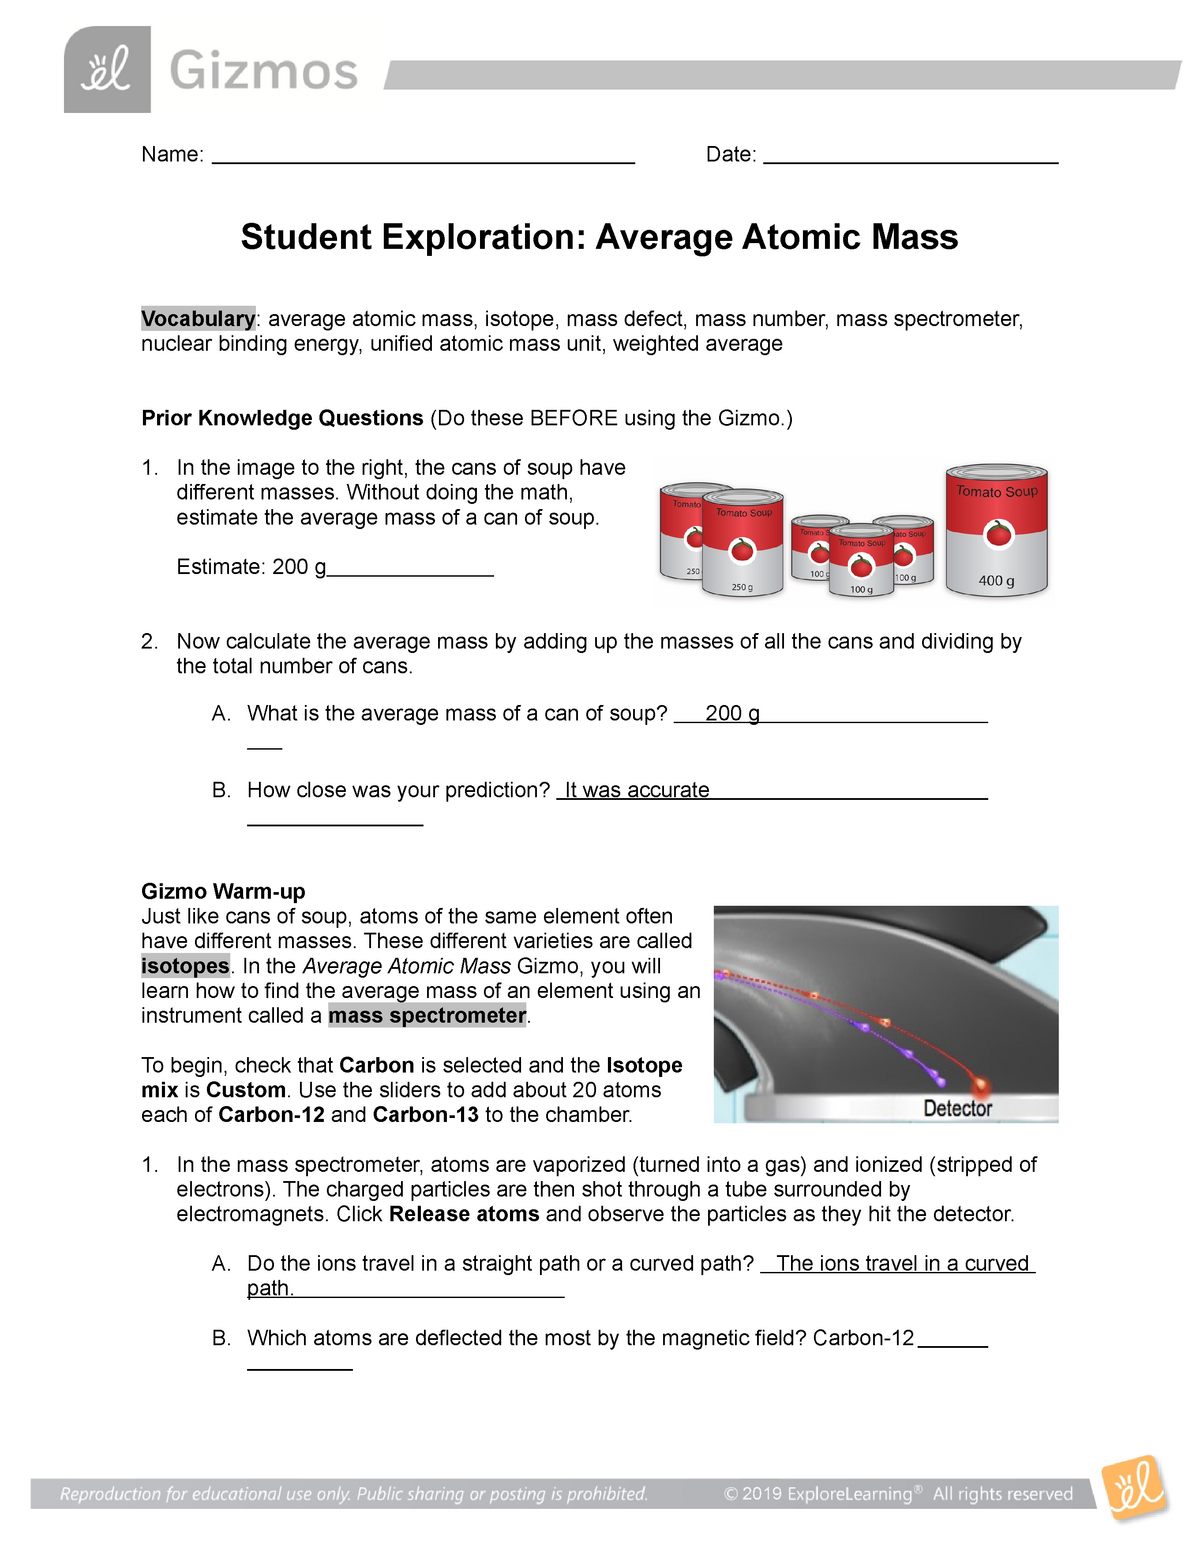 Average Atomic Mass SE - no desc - Name: Date: Student Exploration With Average Atomic Mass Worksheet Answers